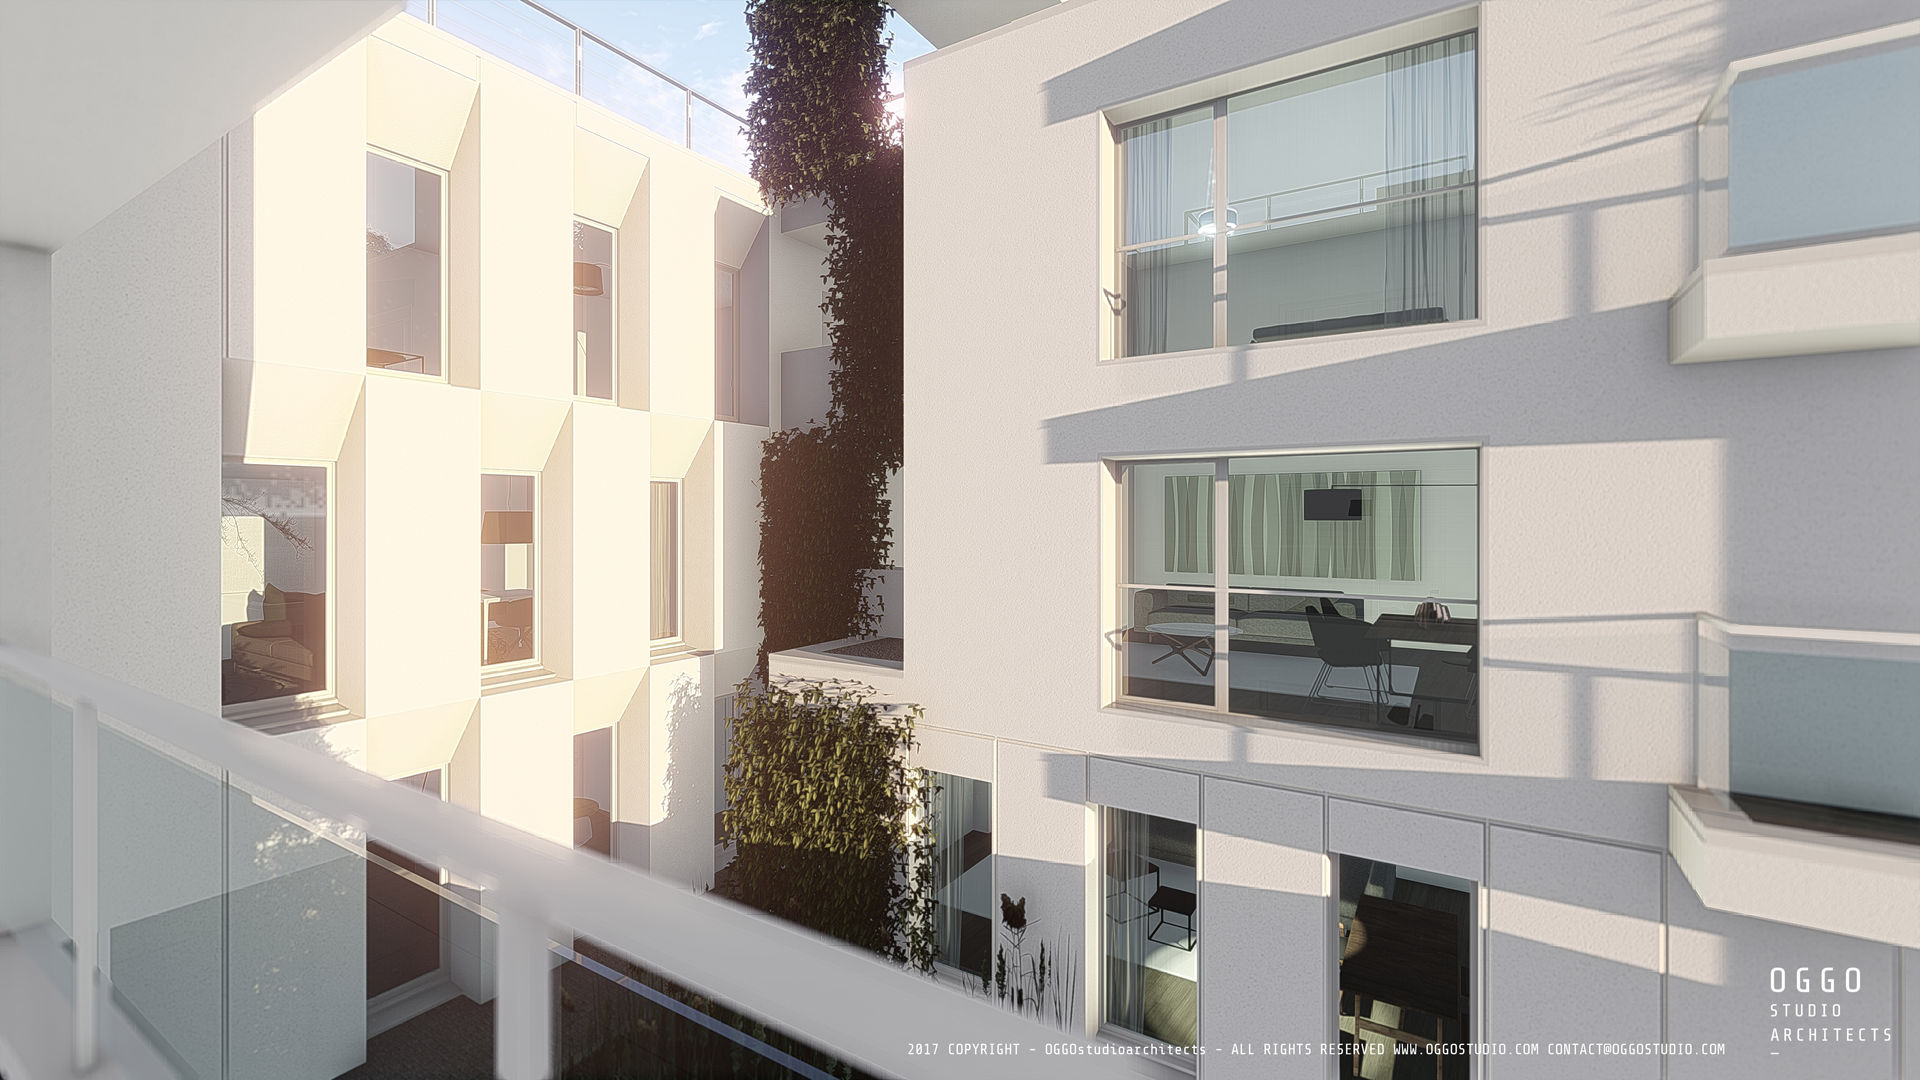 Vue 3D OGGOstudioarchitects, unipessoal lda Maisons minimalistes logement collectif